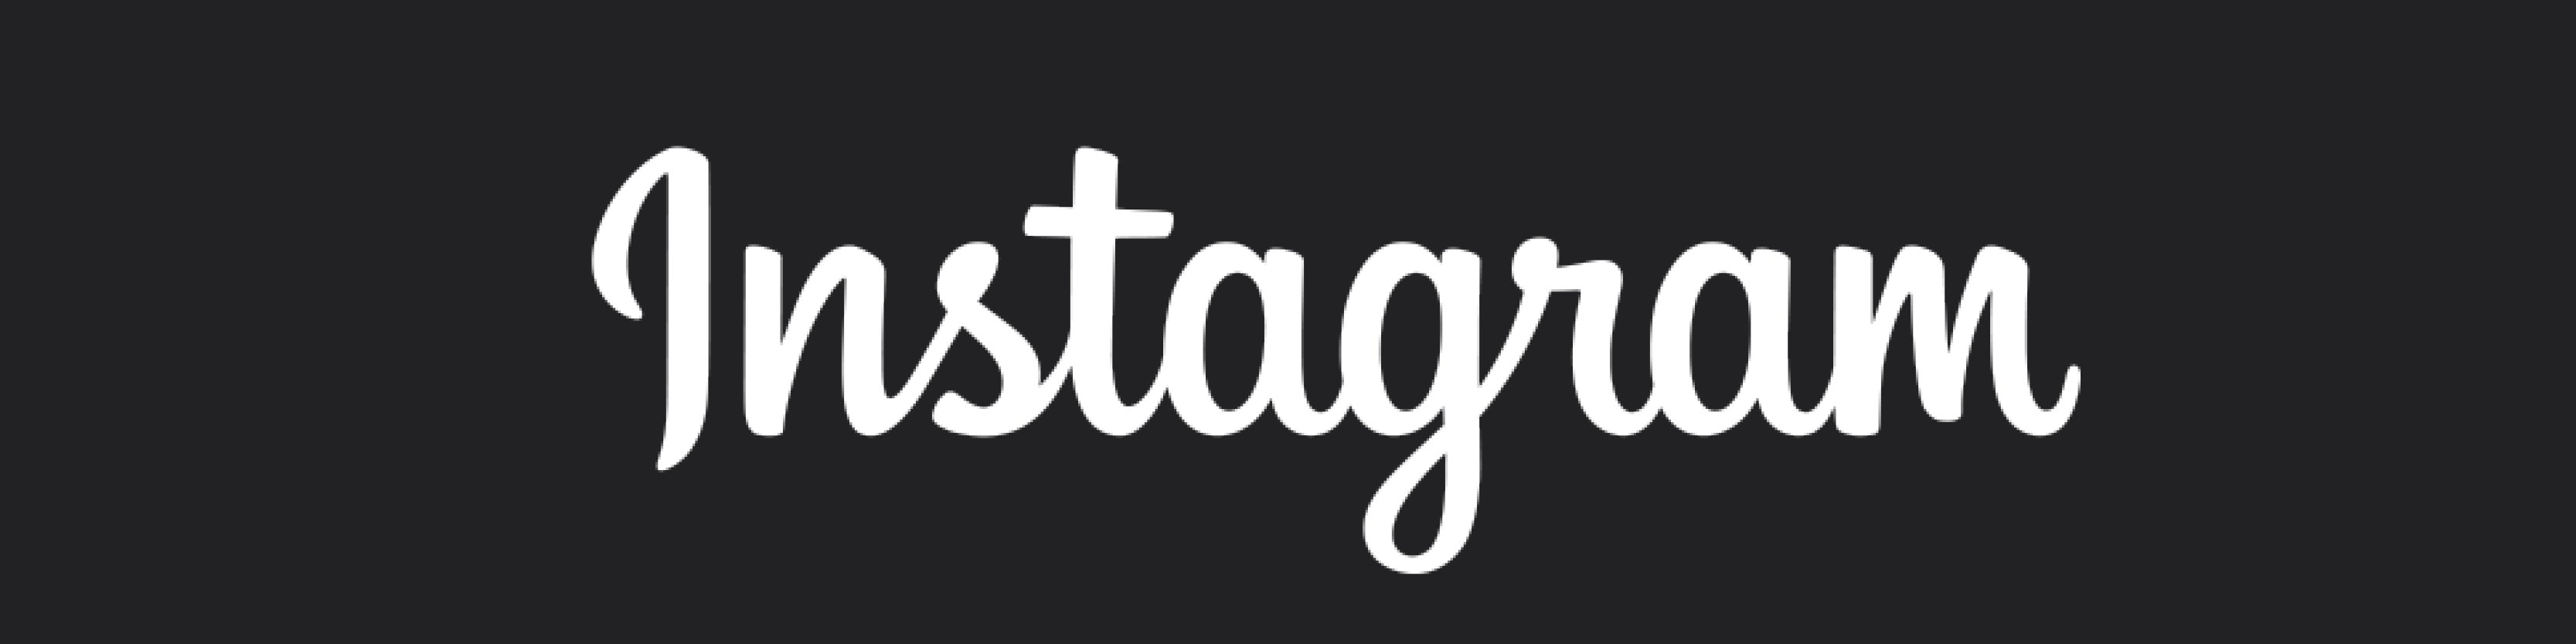 Instagram Word Logo - News & Calendar - Avon Old Farms